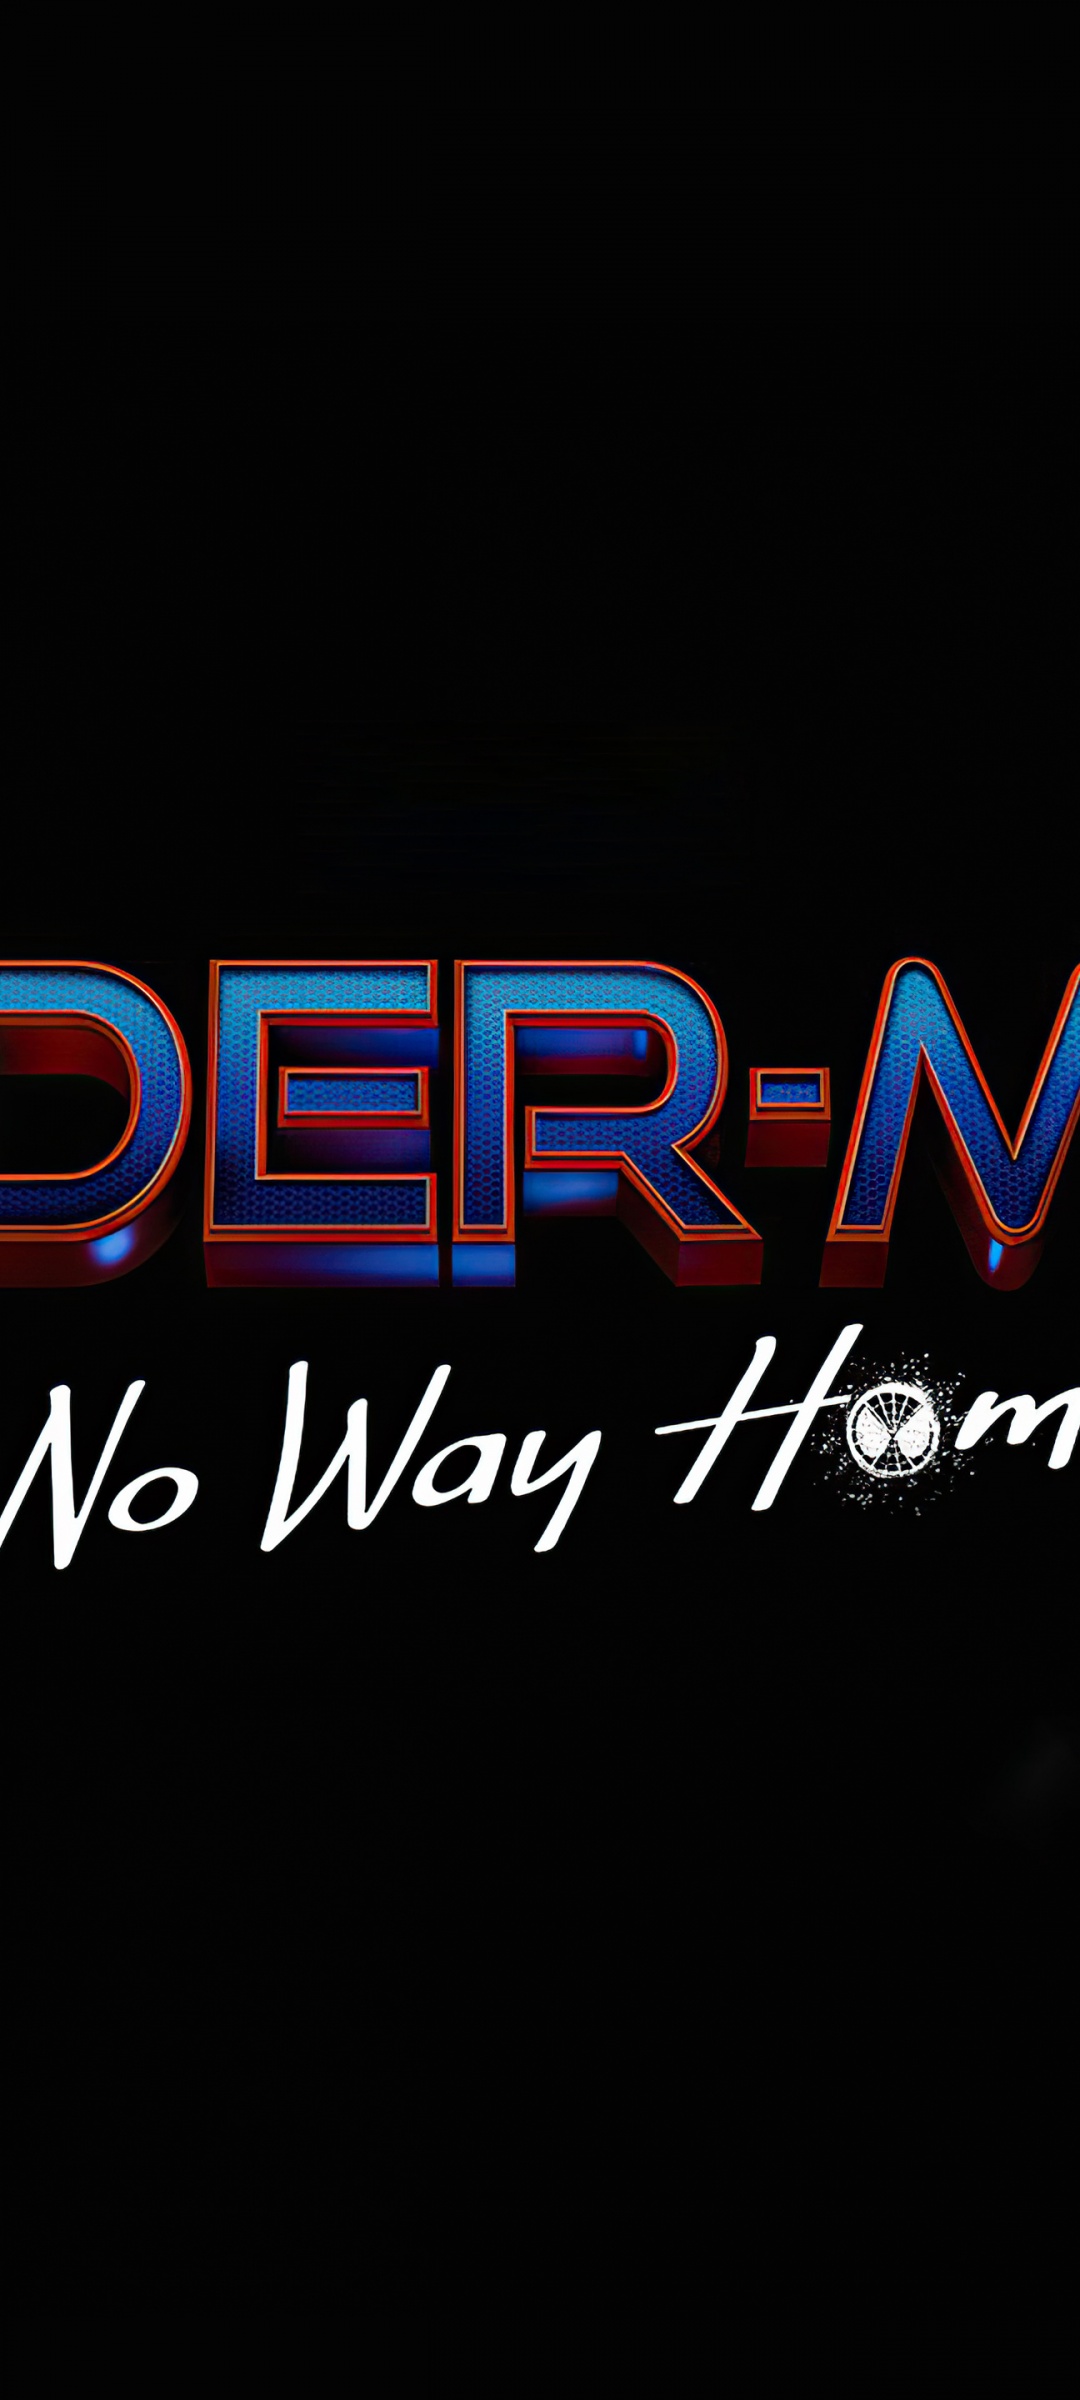 Spider-man No Way Home Wallpaper